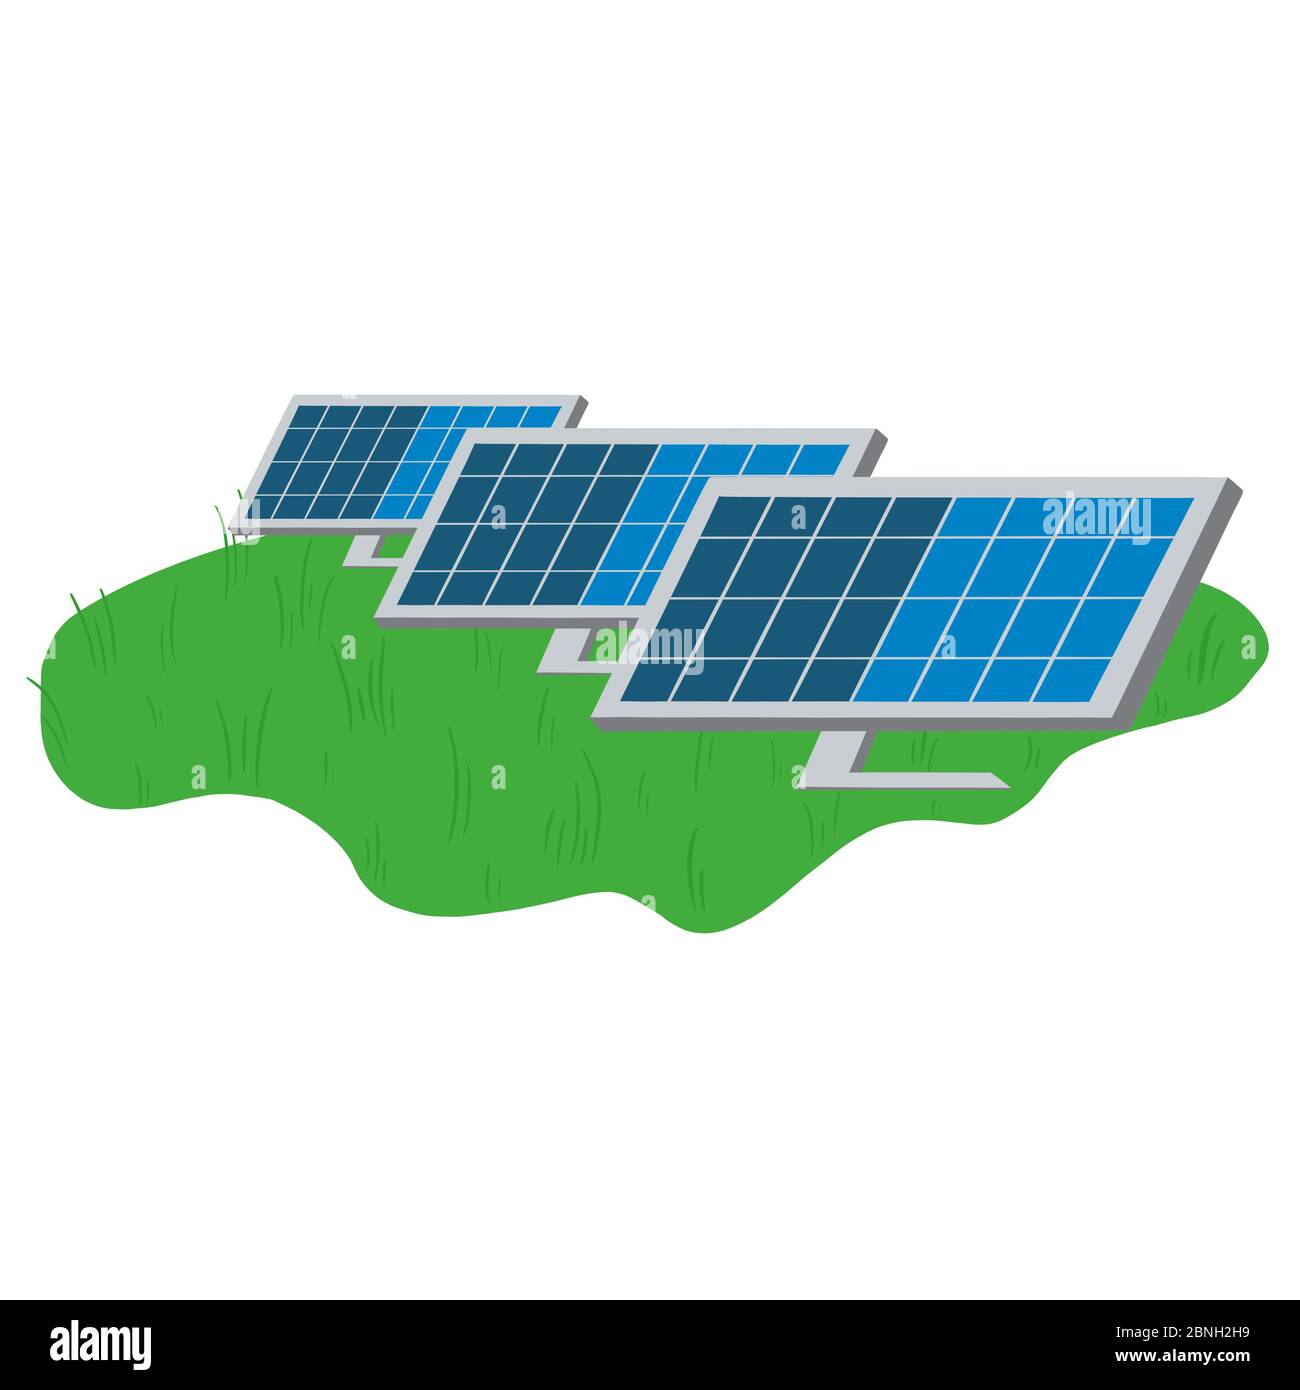 Array of solar cell panels on green field. Solar power plant illustration. Photovoltaic solar power panels, alternative power energy concept. Stock Photo